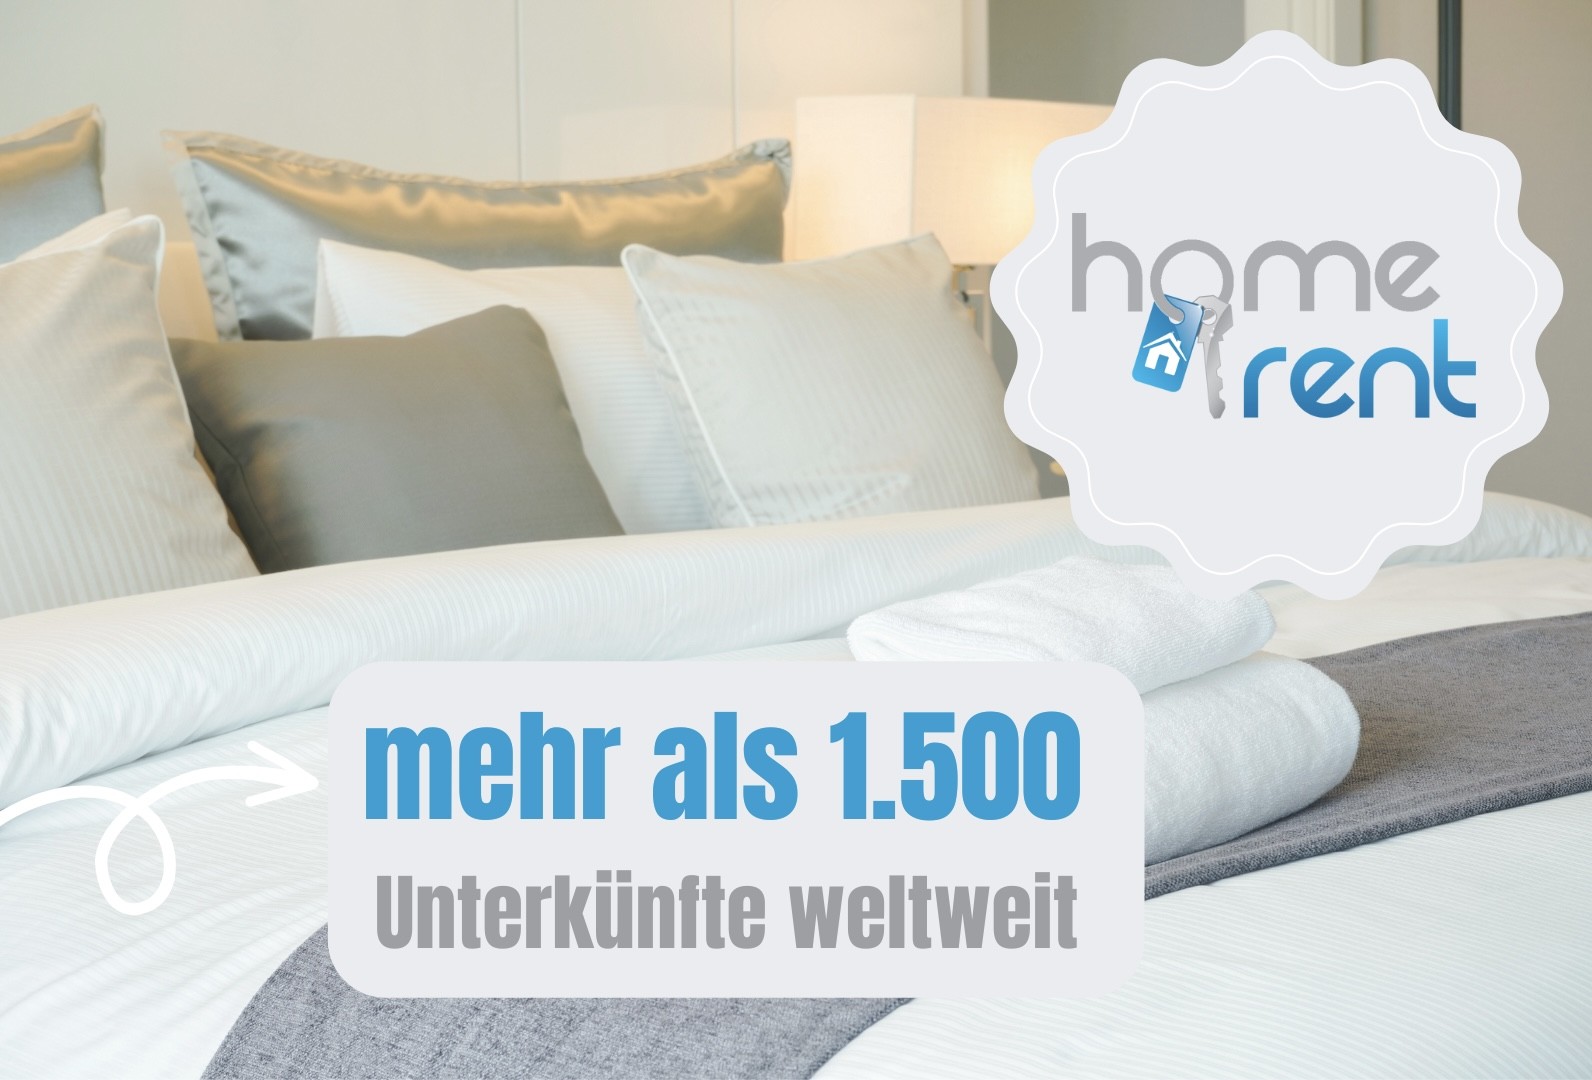 Monteurwohnungen in Koblenz und Umgebung Homerent Immobilien GmbH 56070 169163782464d45840a26ac